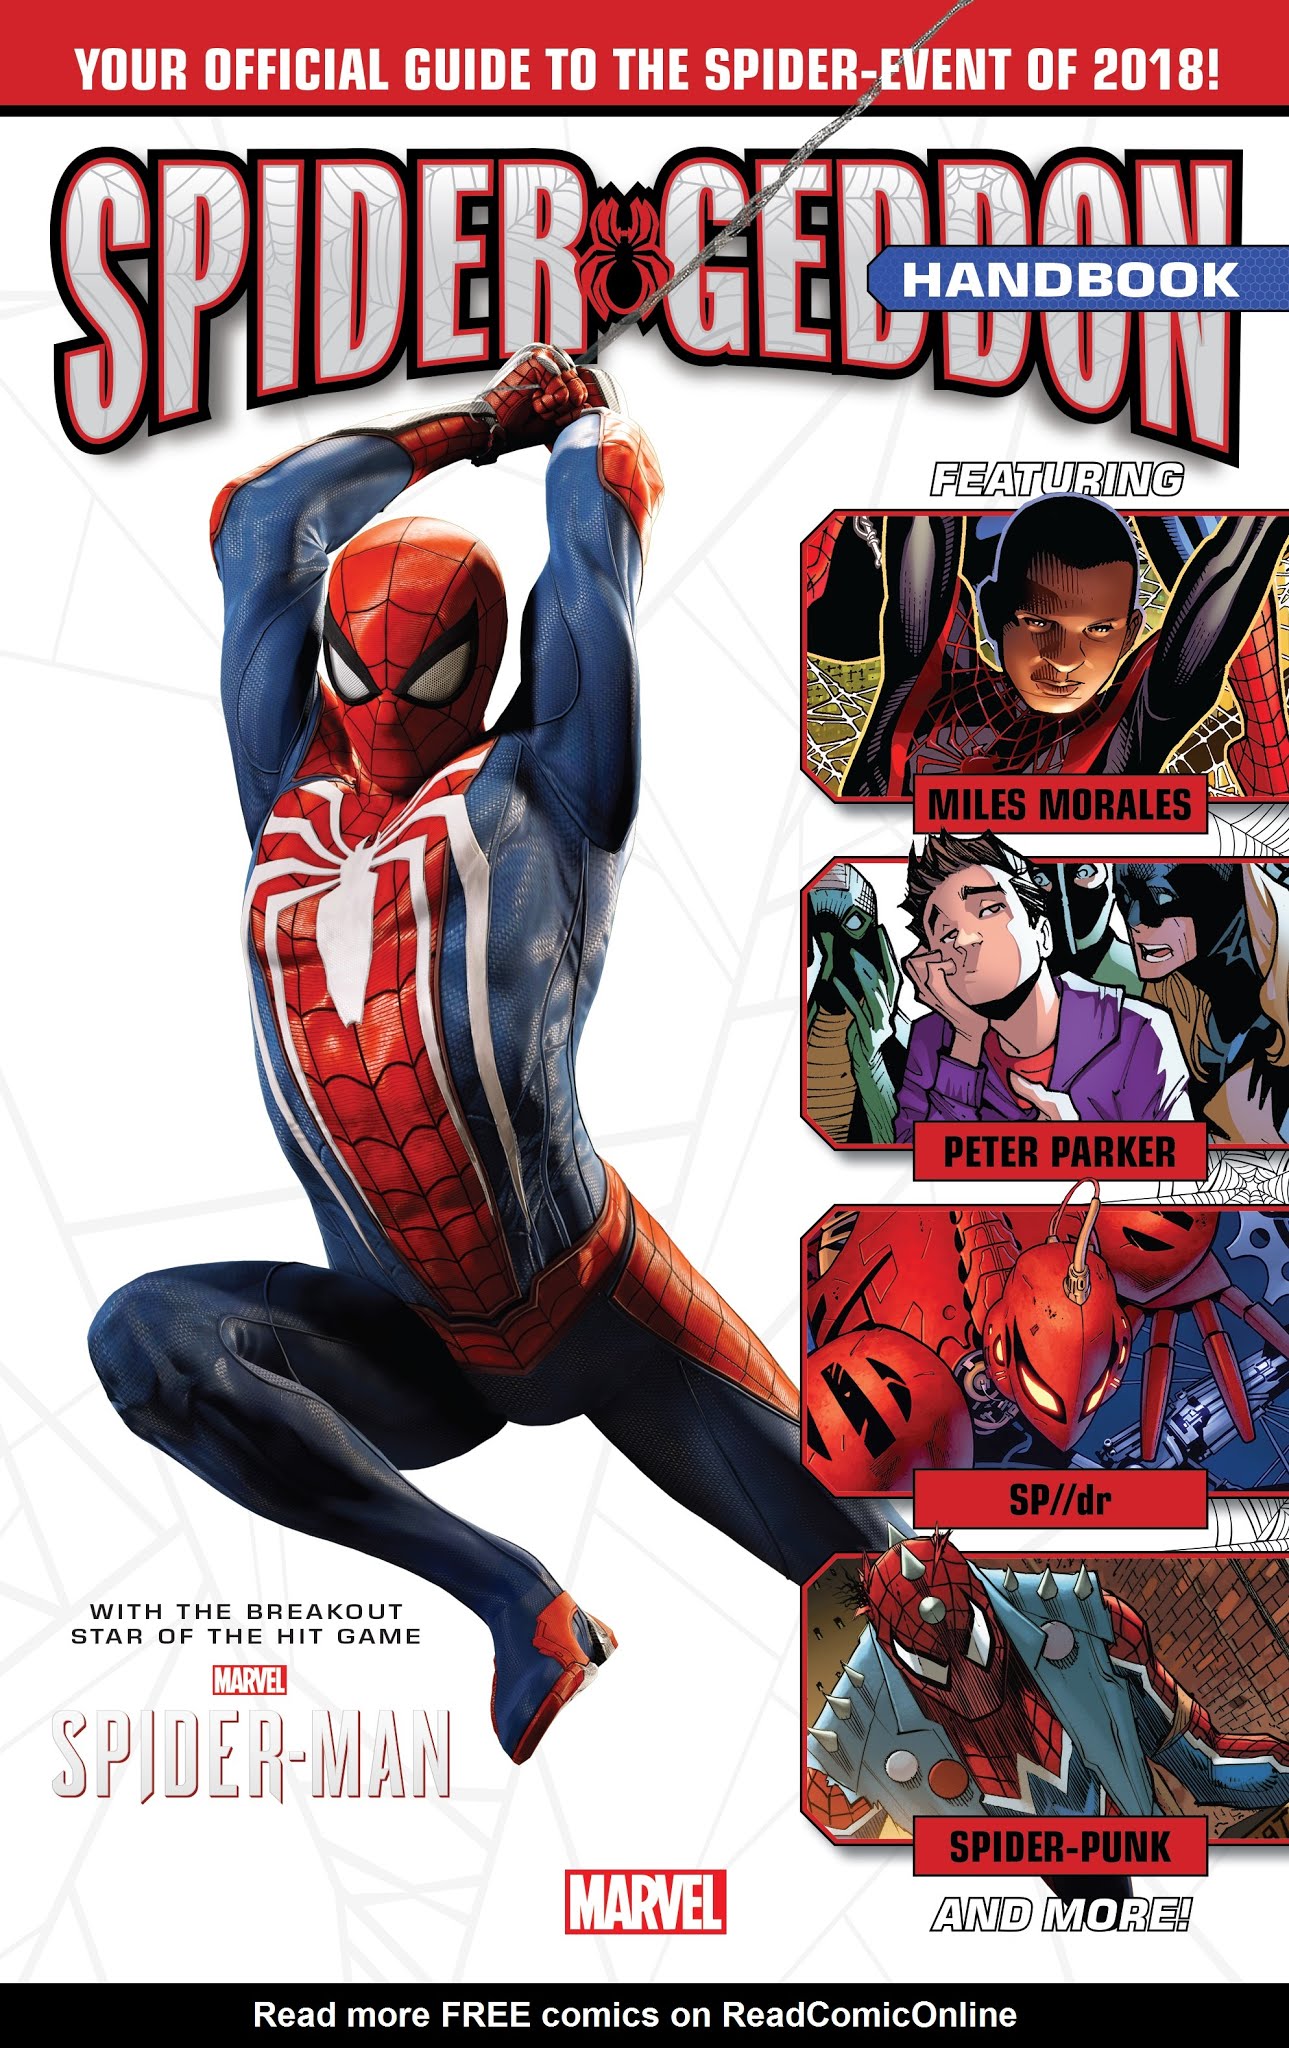 Read online Spider-Geddon Handbook comic -  Issue # Full - 1